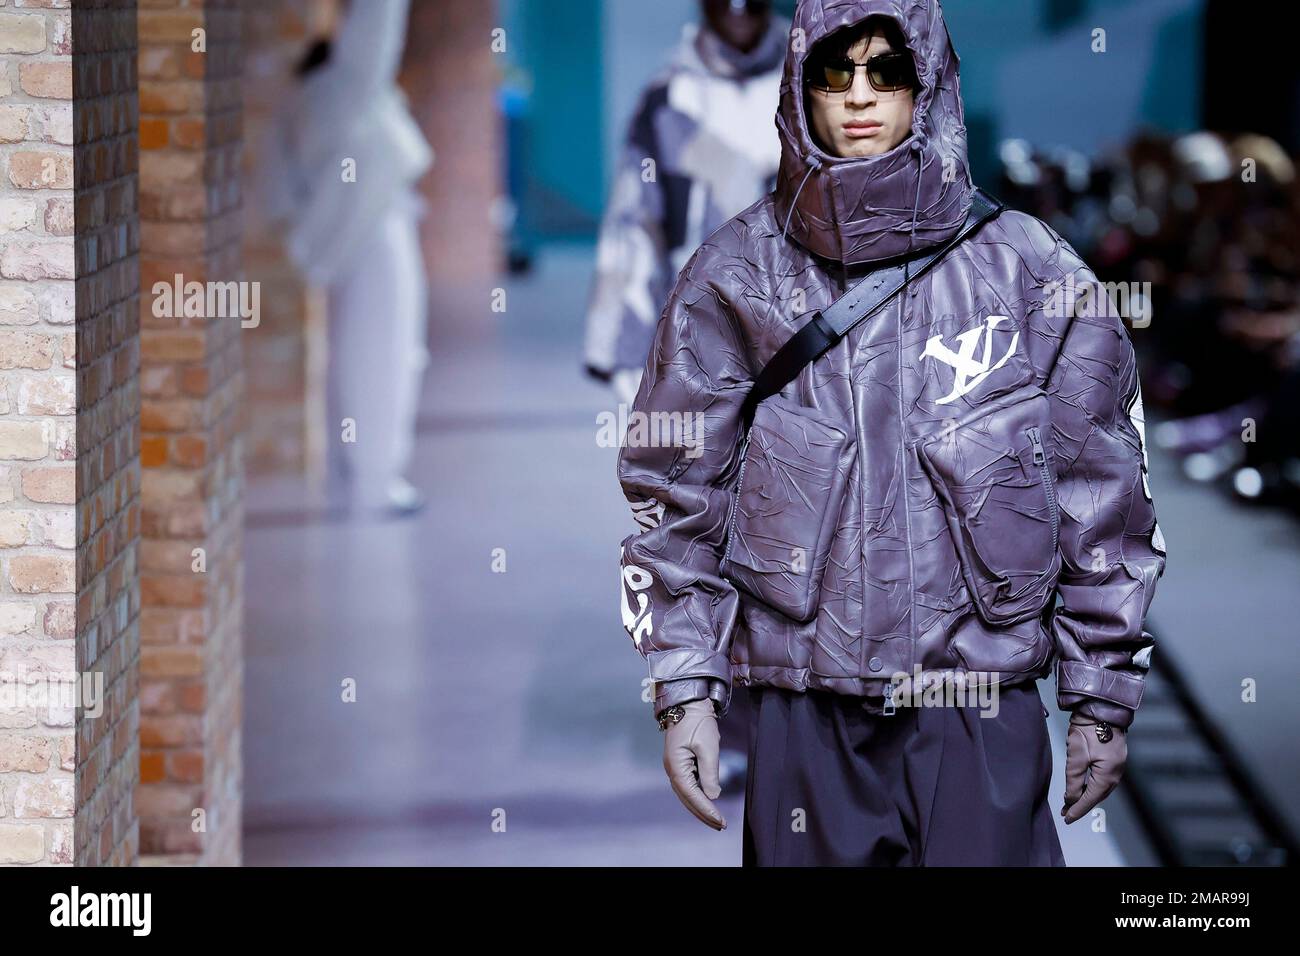 Louis Vuitton Fall 2023 Menswear